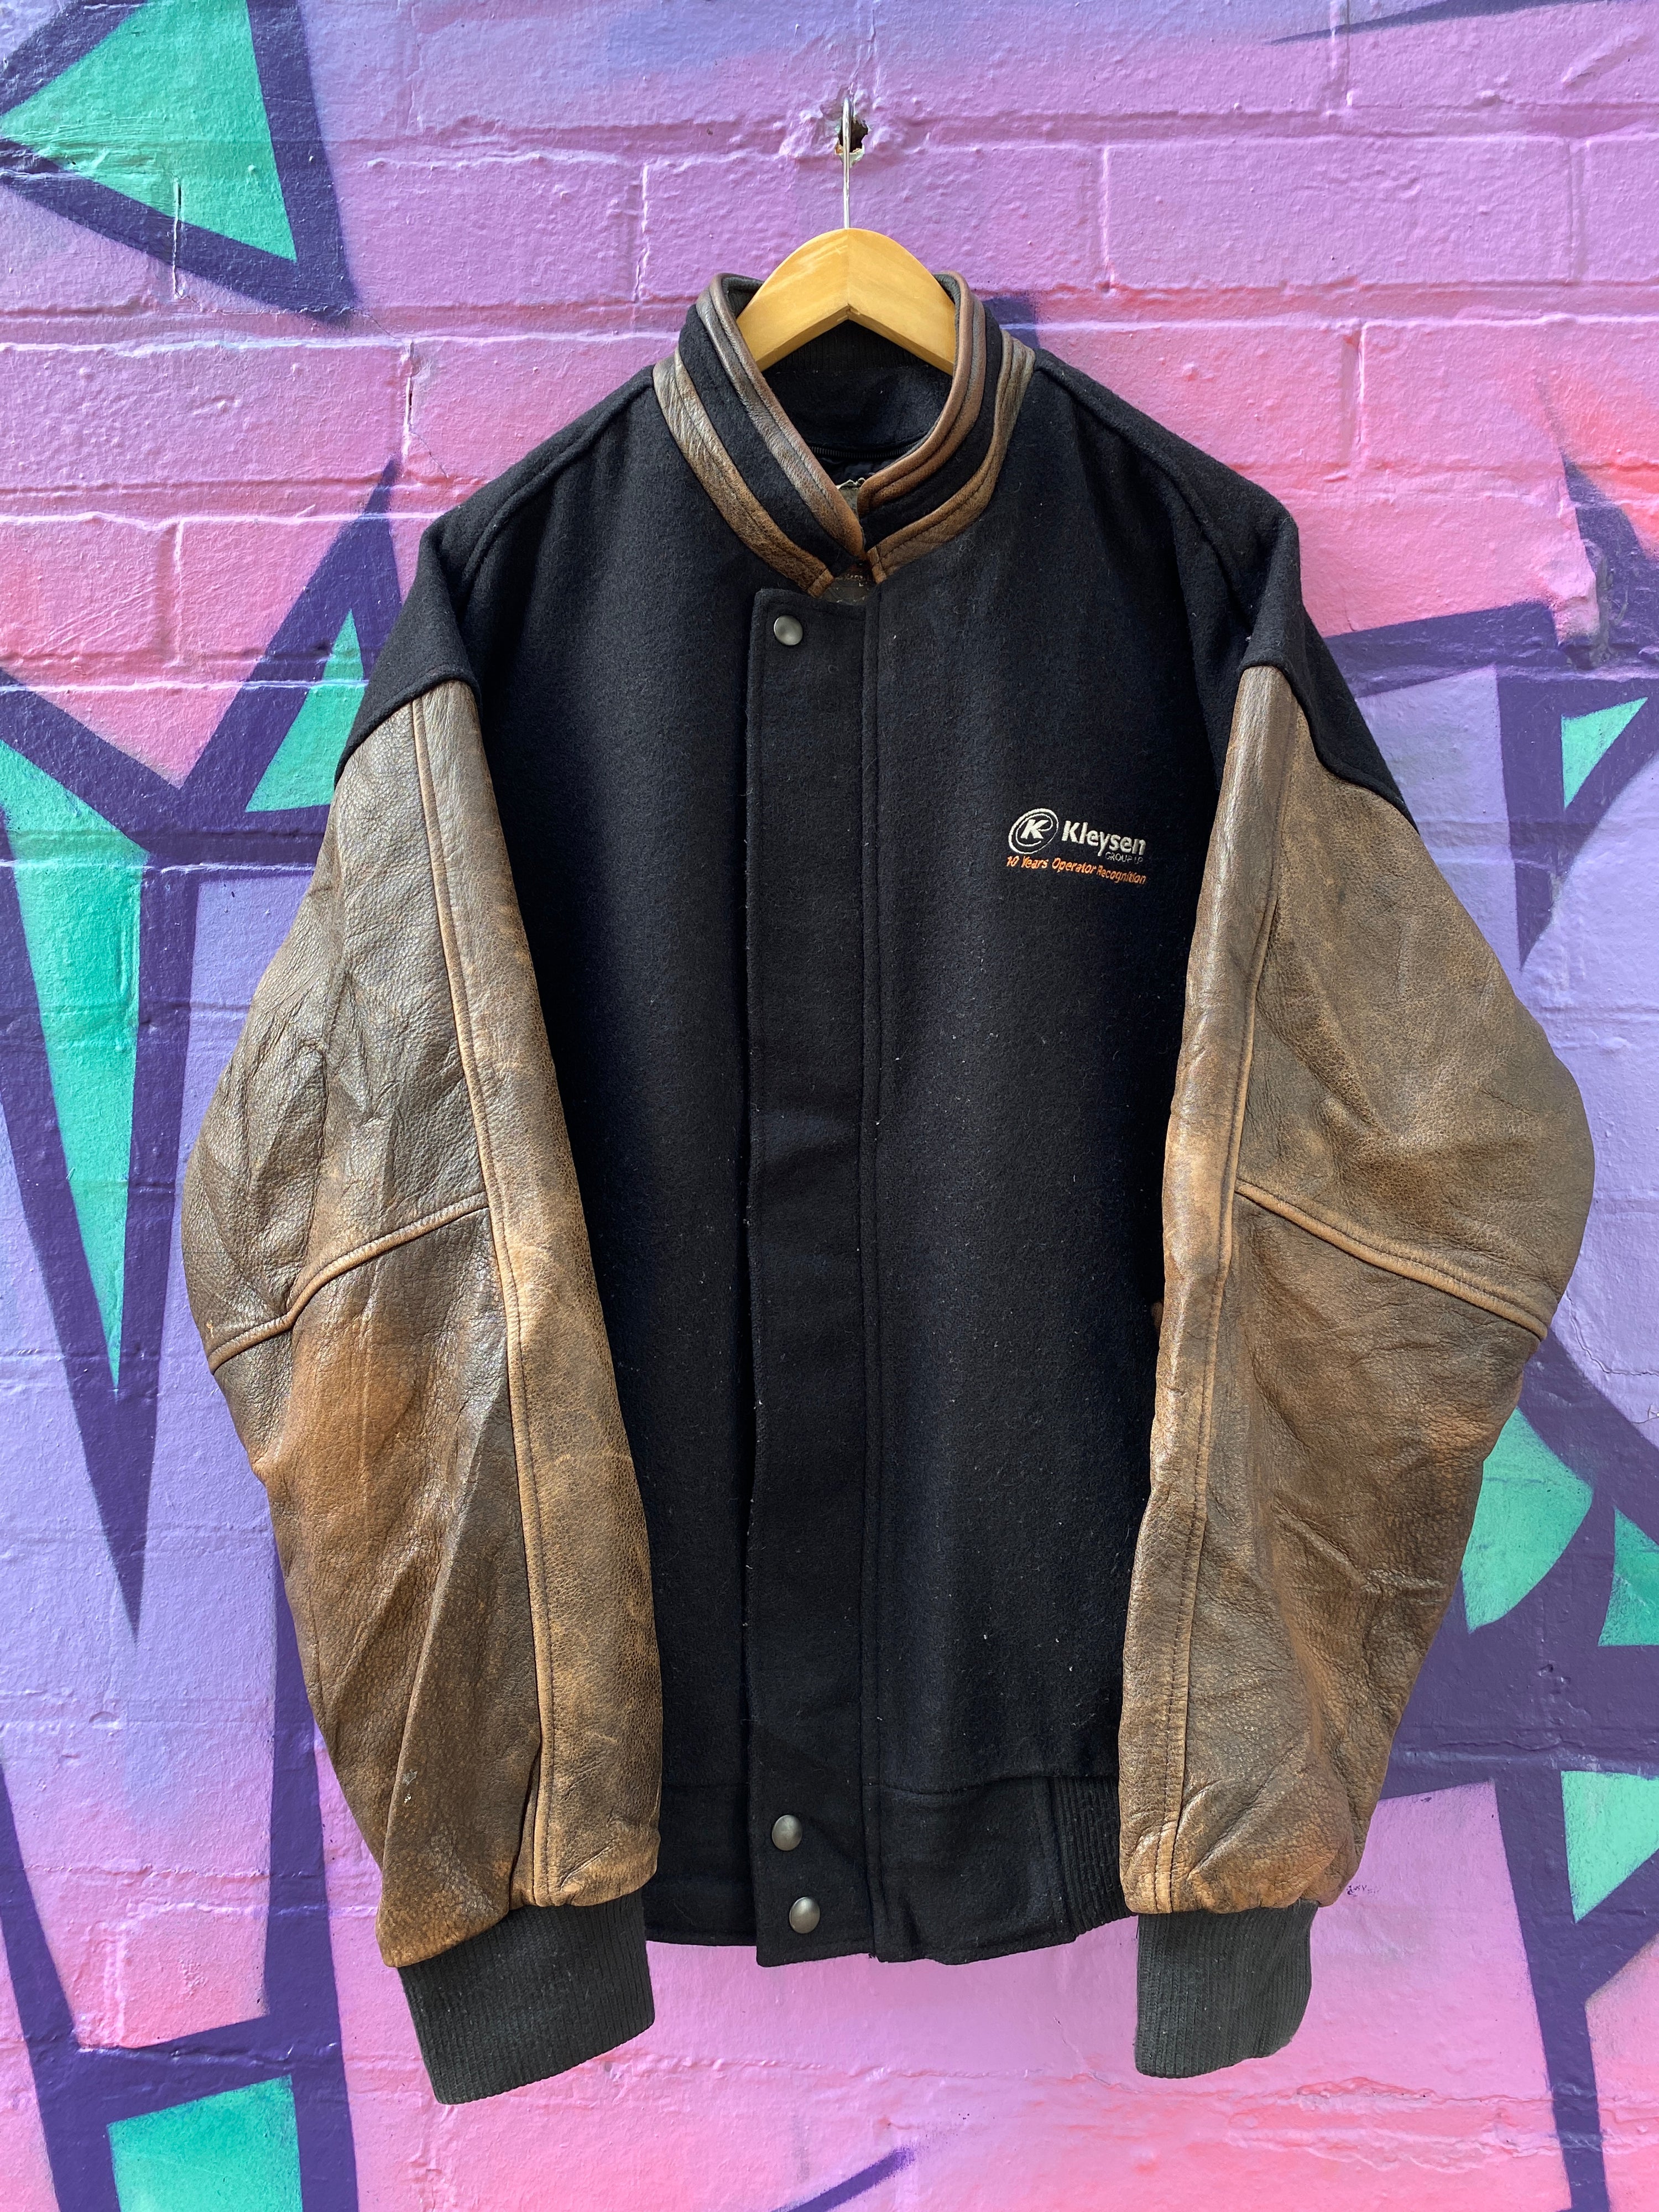 L - Vintage 'Kleysen' Varsity Jacket Black/Brown